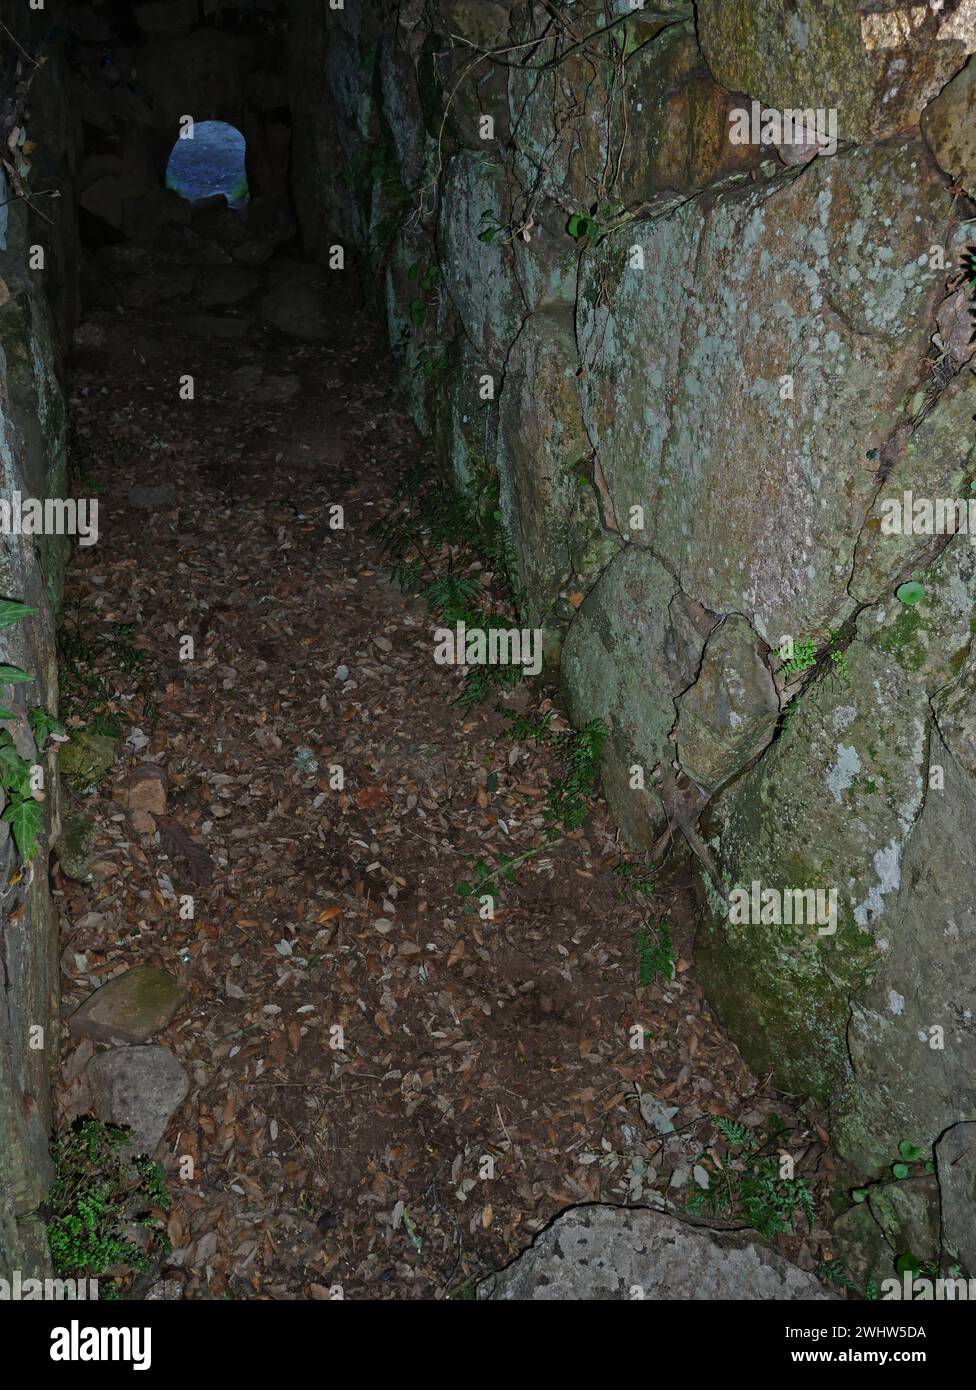 Pascaredda giants tomb in Calangianus, Sardinia, Italy Stock Photo